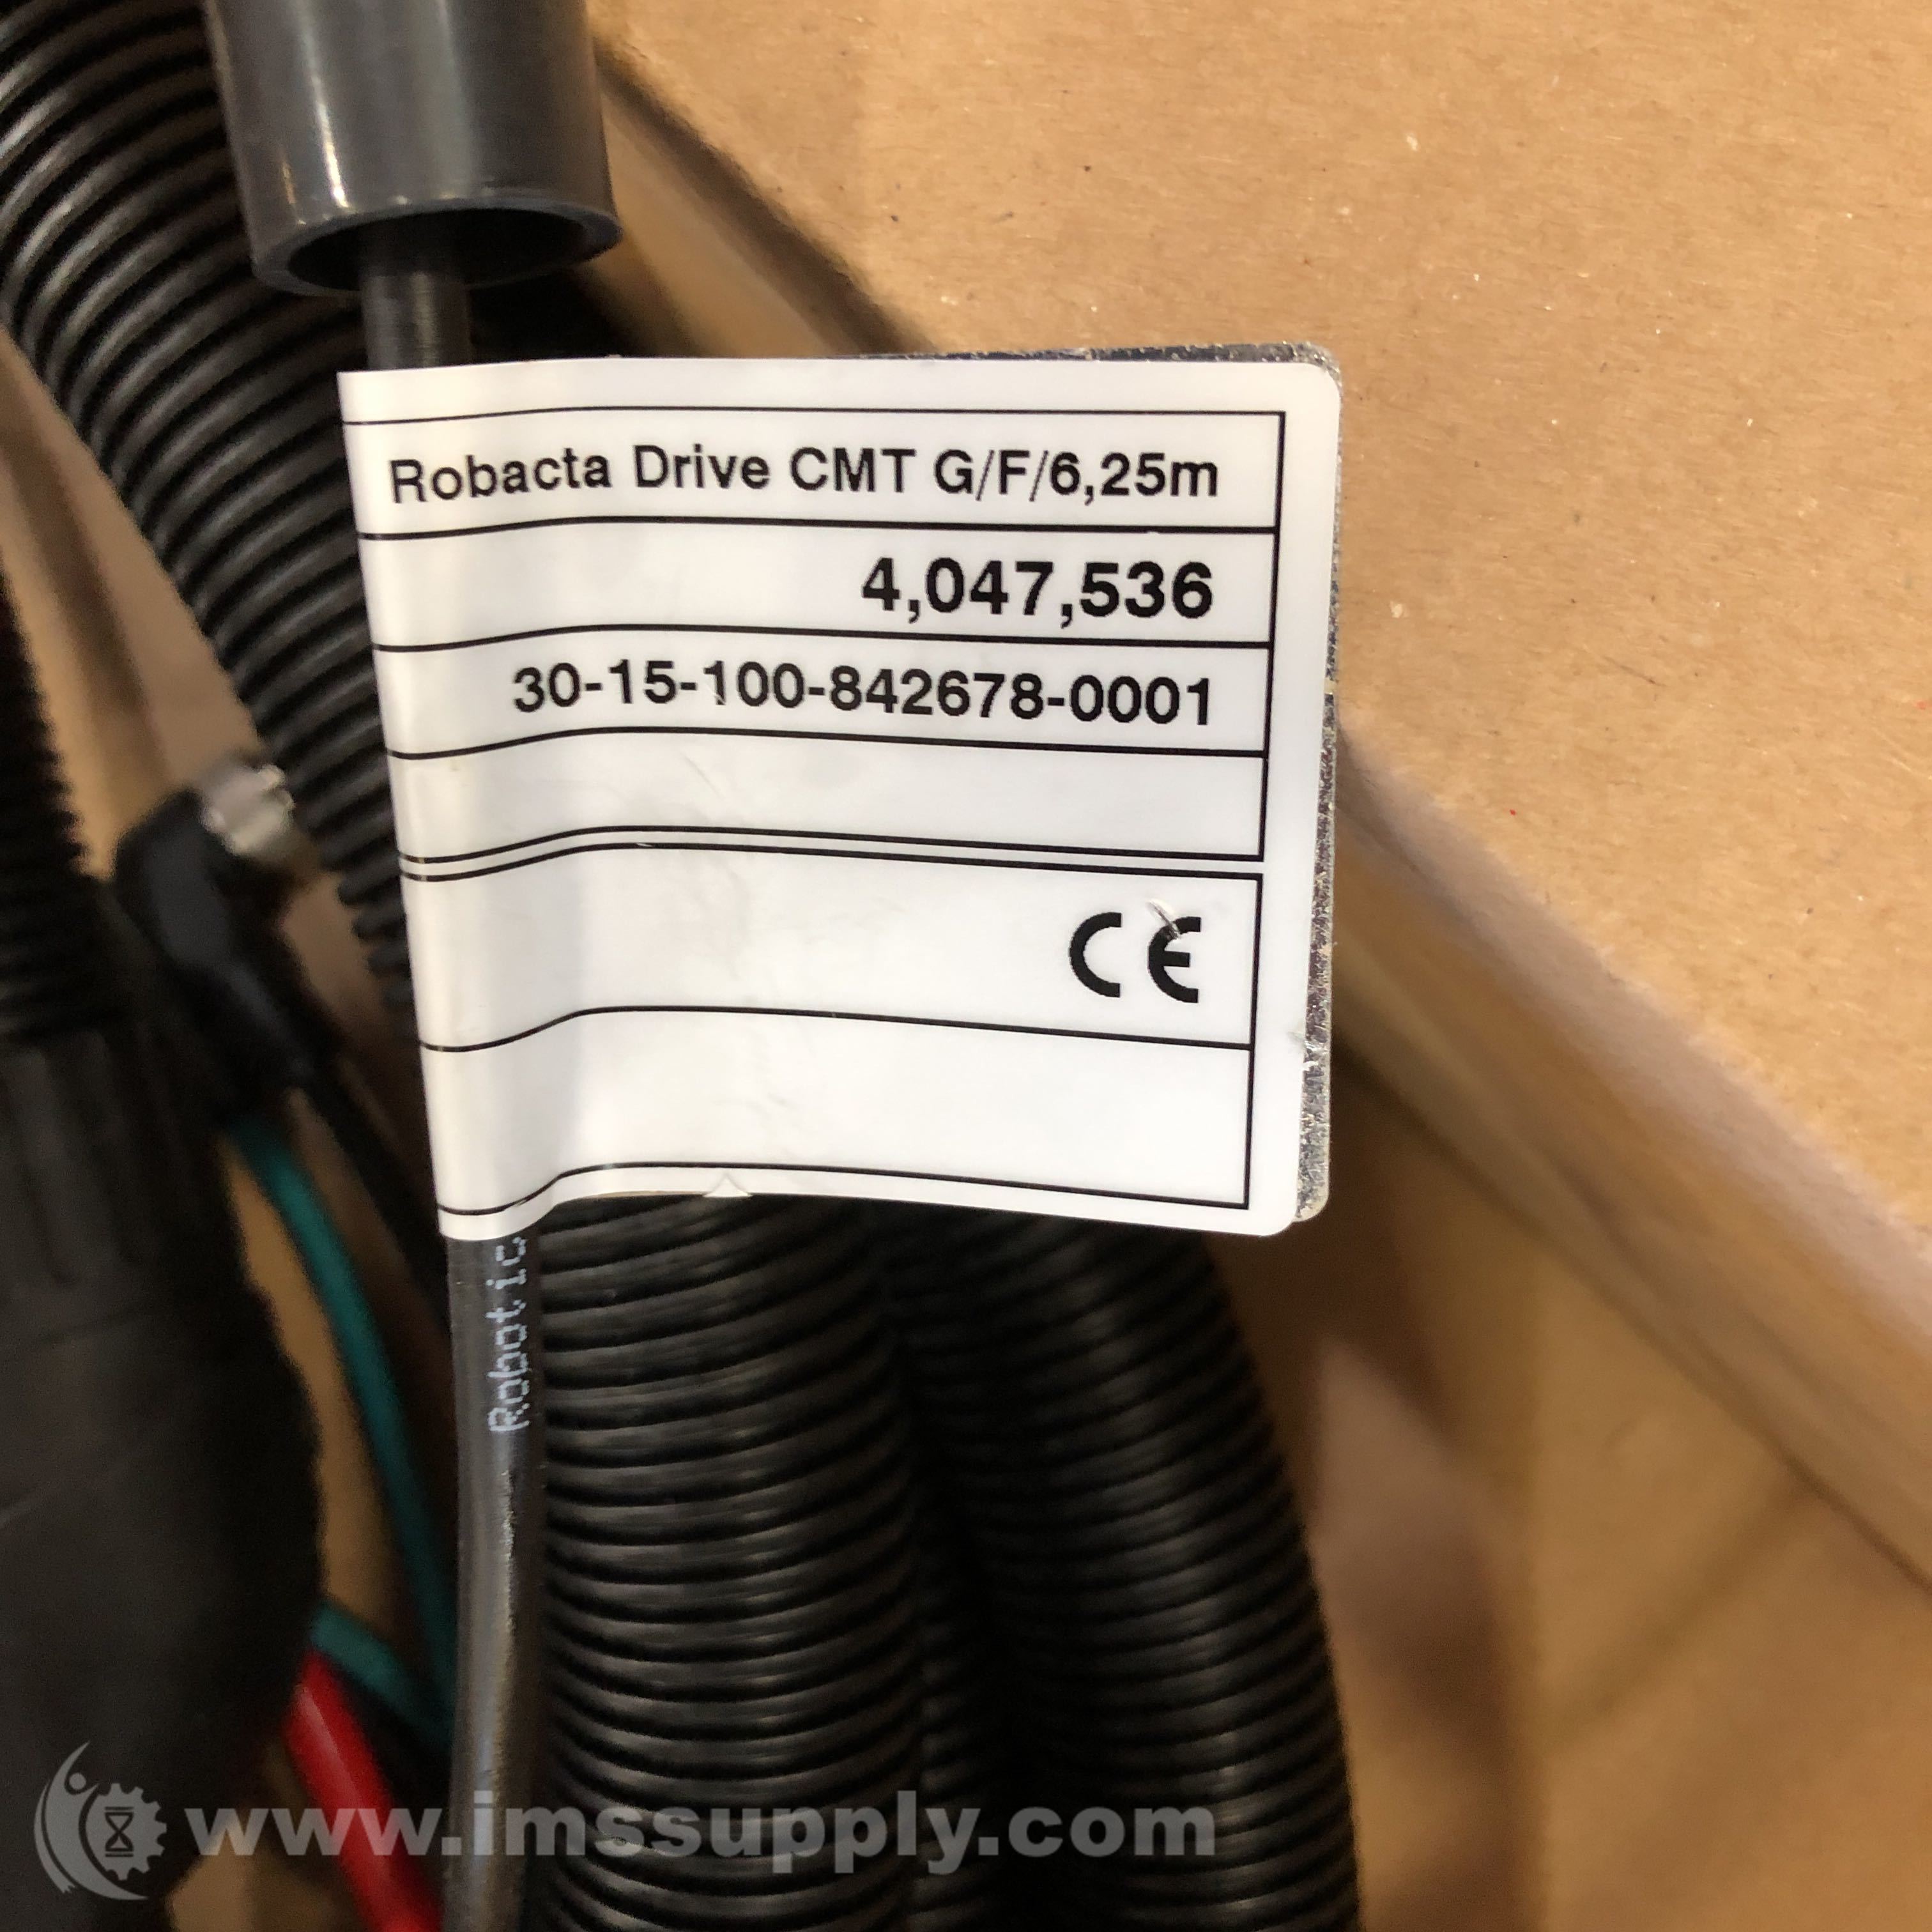 Fronius 4,047,536 Robacta Drive CMT G/F/6, 25m LG - IMS Supply